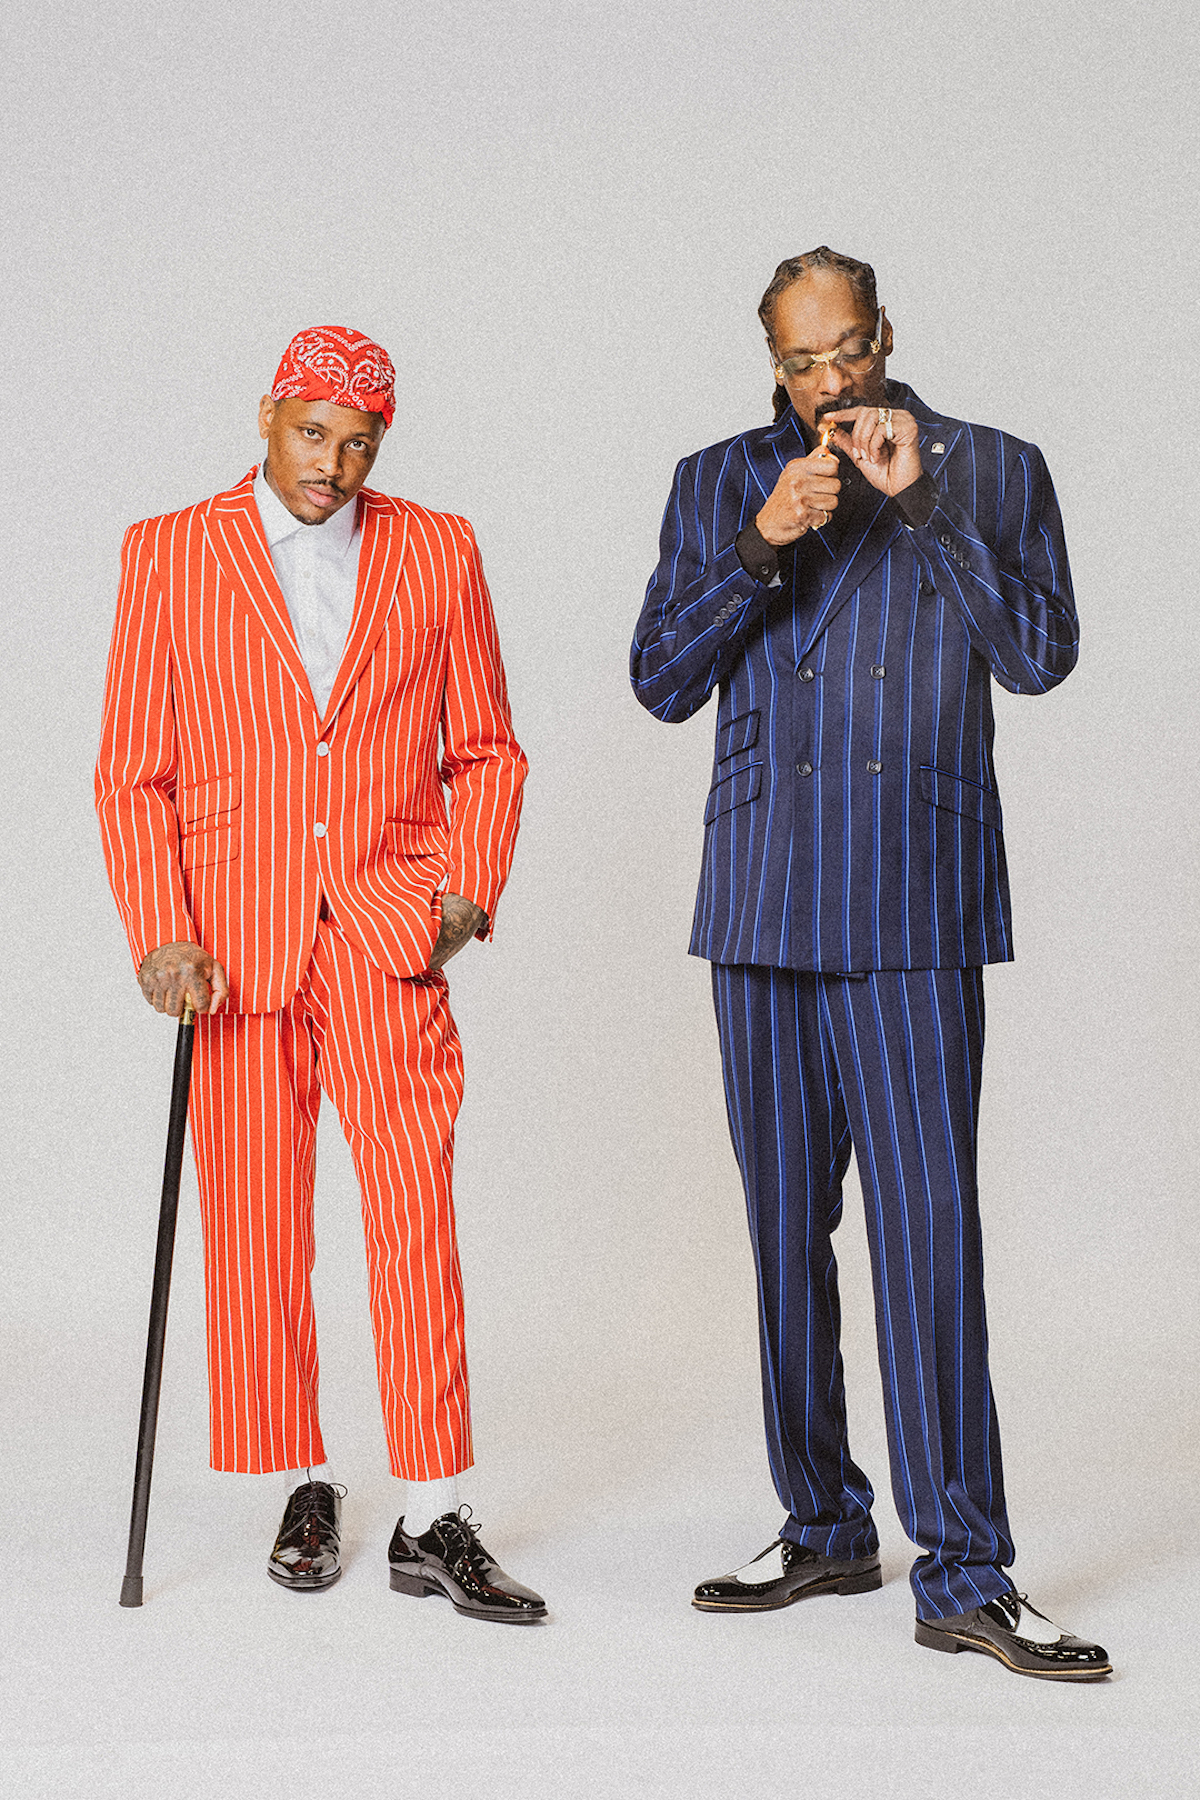 Snoop Dogg & 4Hunnid Team up for Collaborative '4HunnidxSnoop Dogg